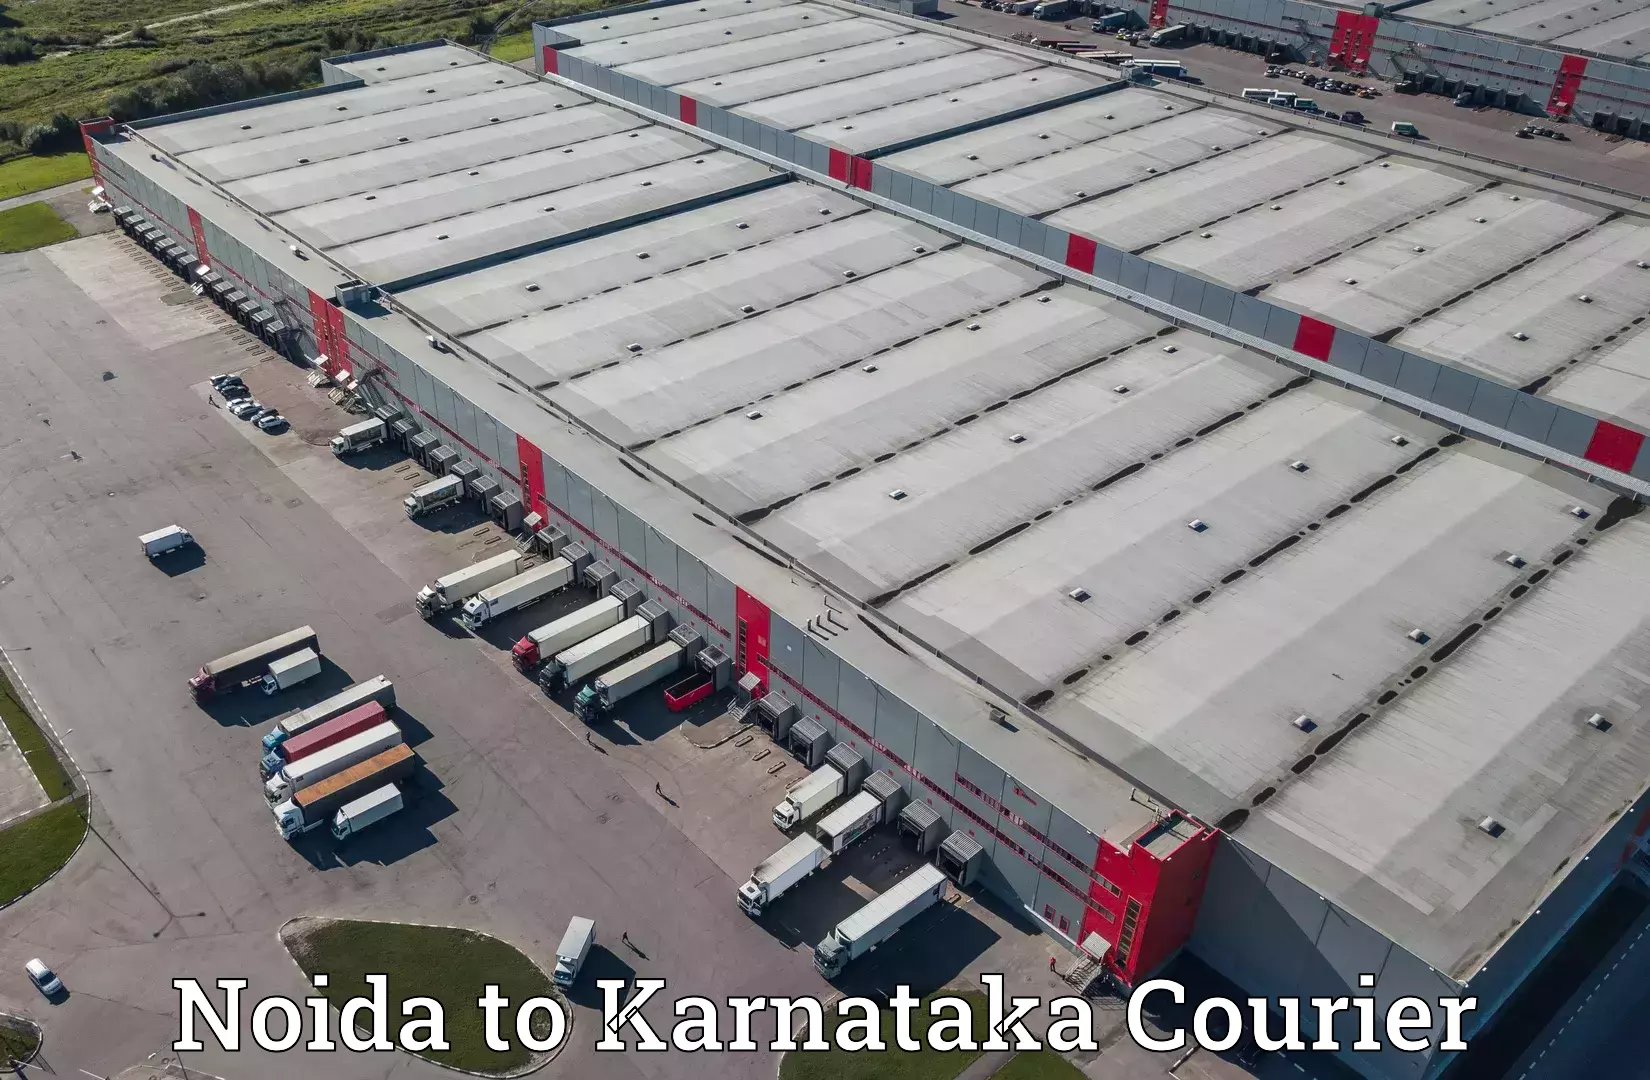 Express delivery network Noida to Karnataka